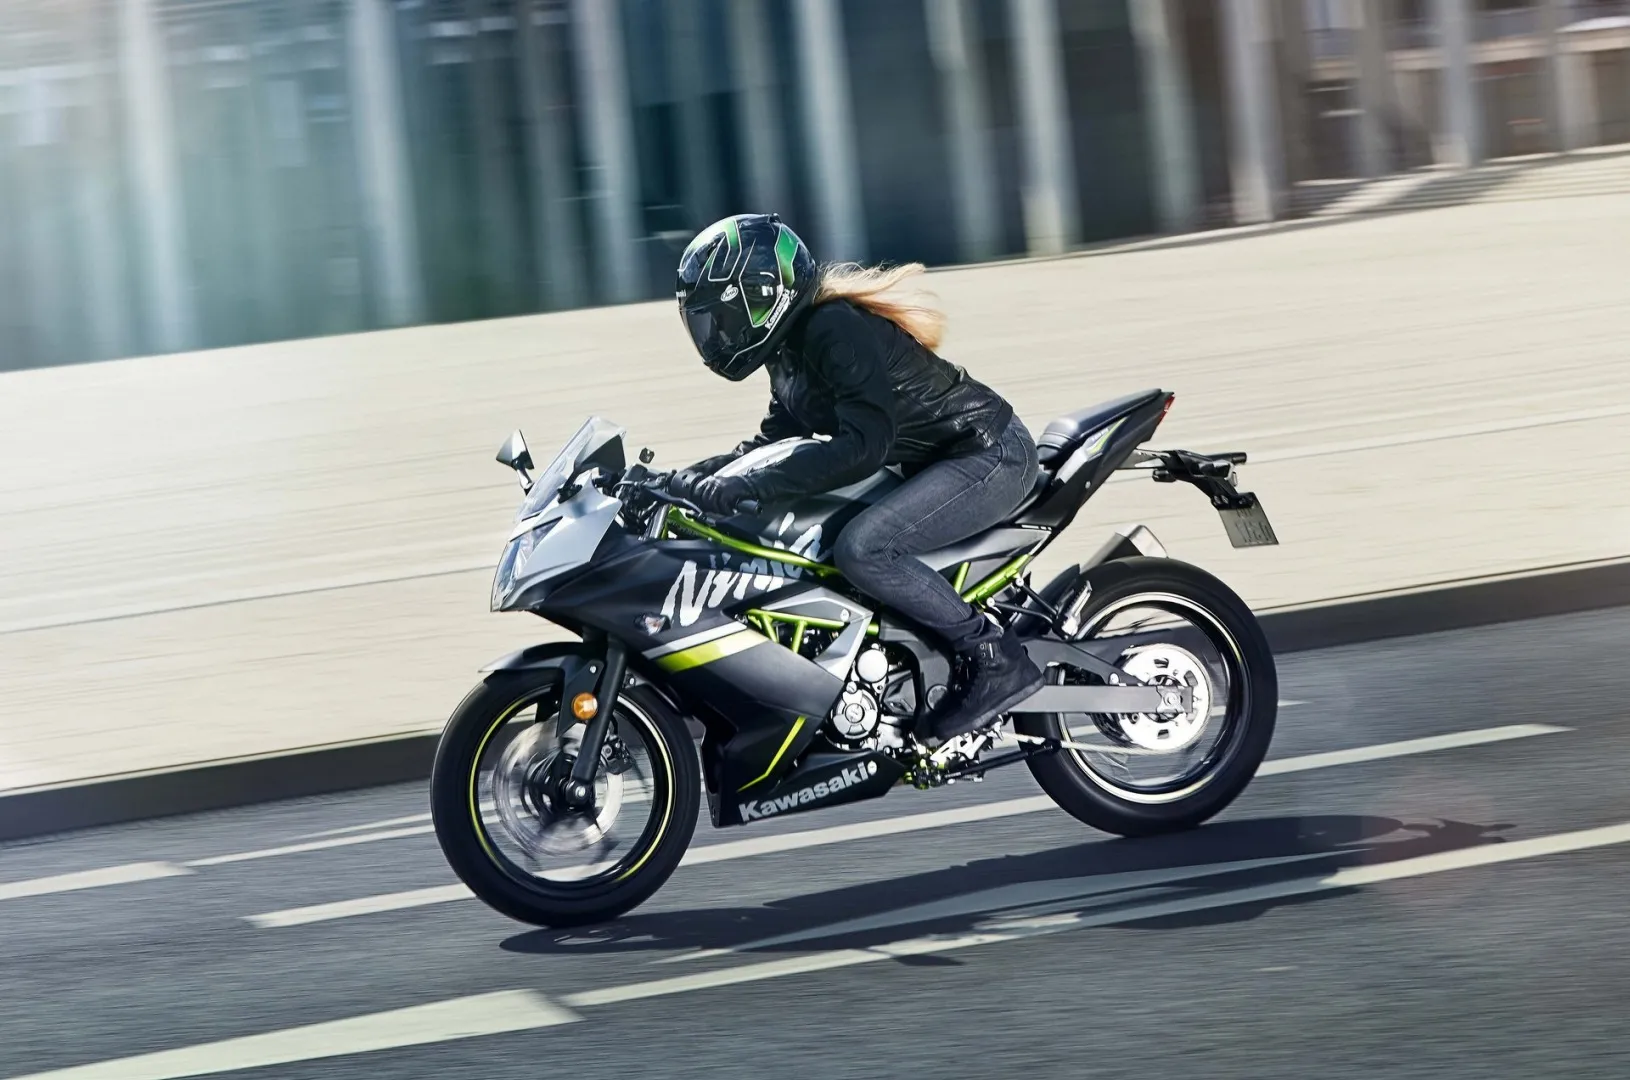 Moto del día: Kawasaki Ninja 125